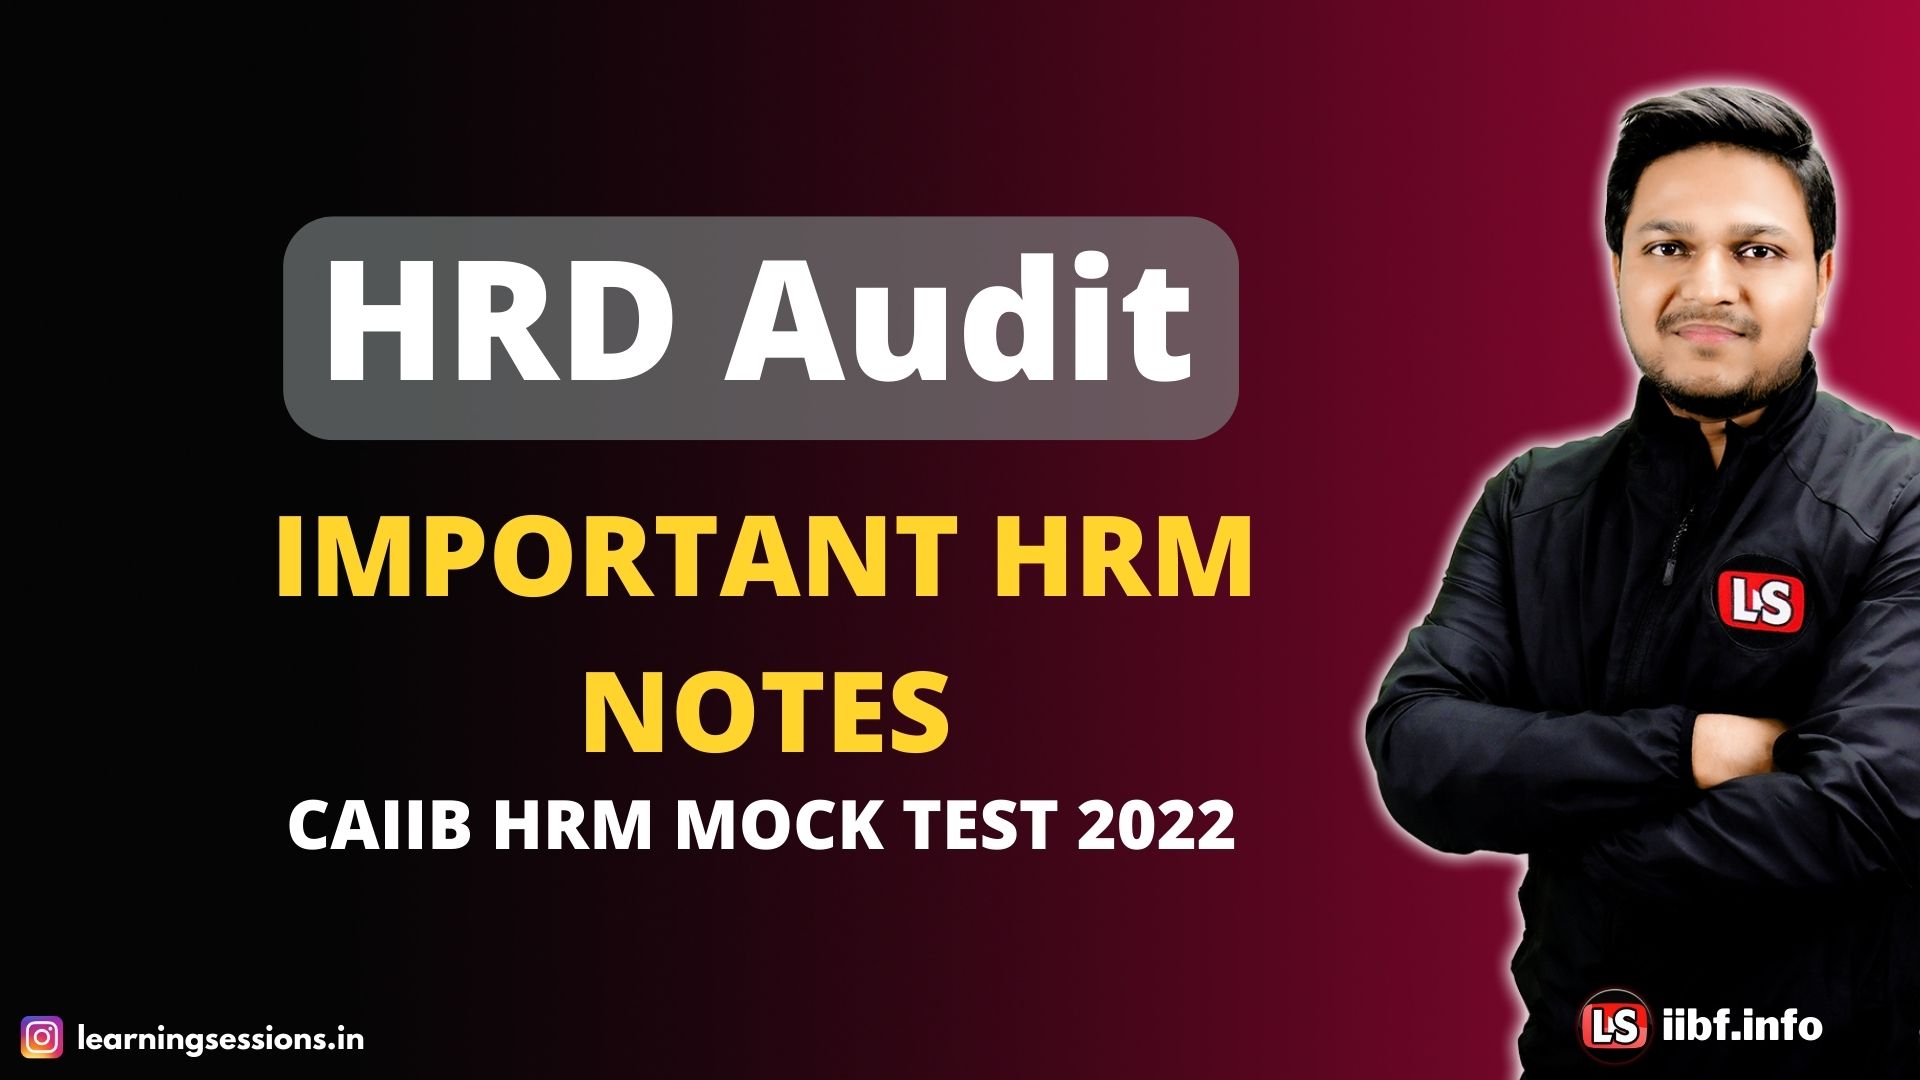 HRD Audit | Important HRM Notes | CAIIB HRM Mock Test 2022